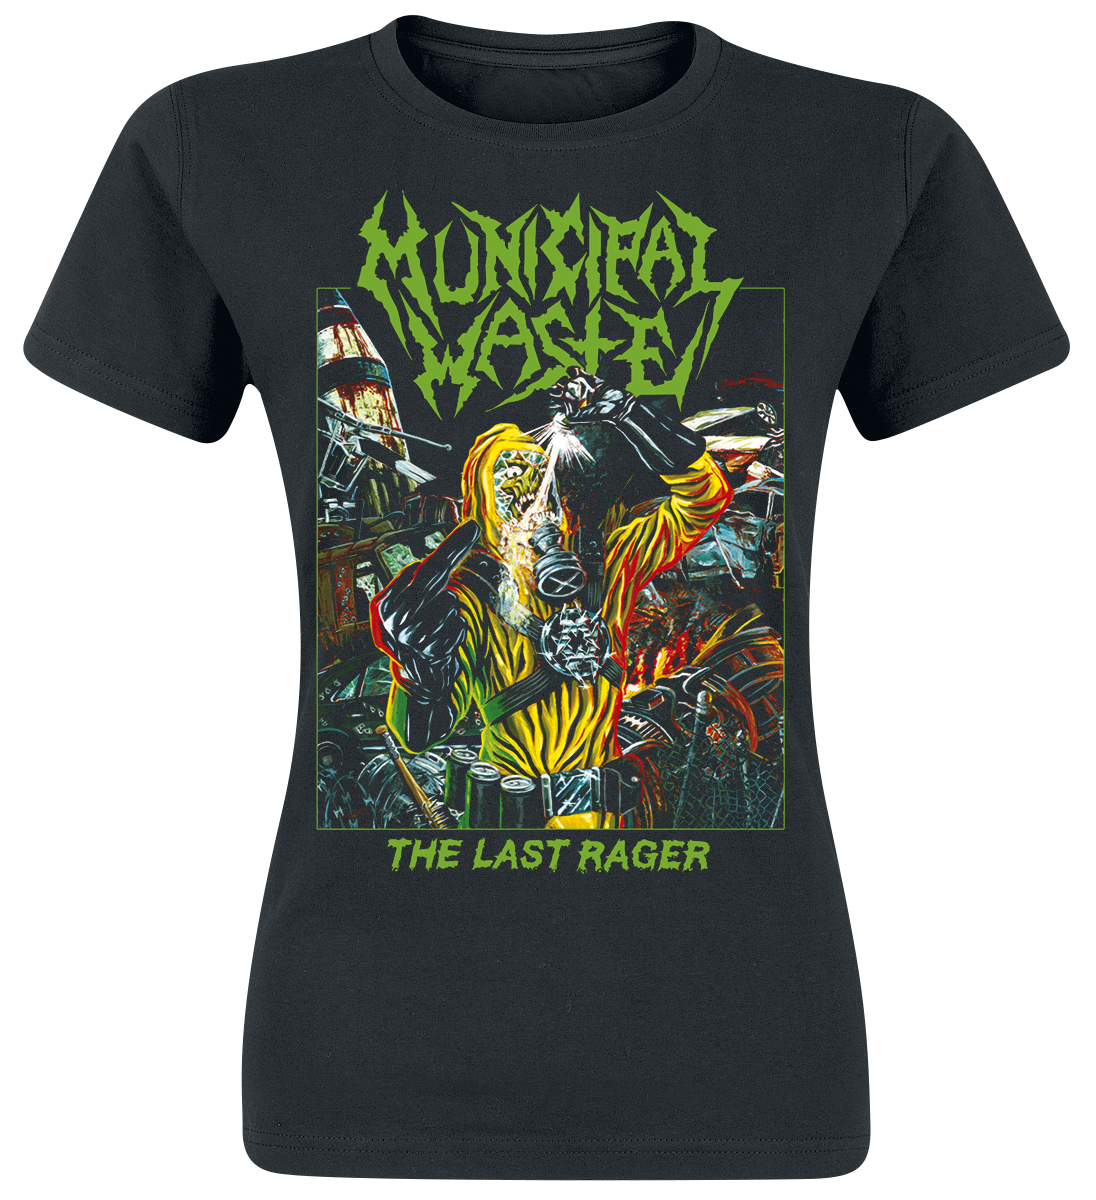 Municipal Waste - The Last Rager - Girls shirt - black image